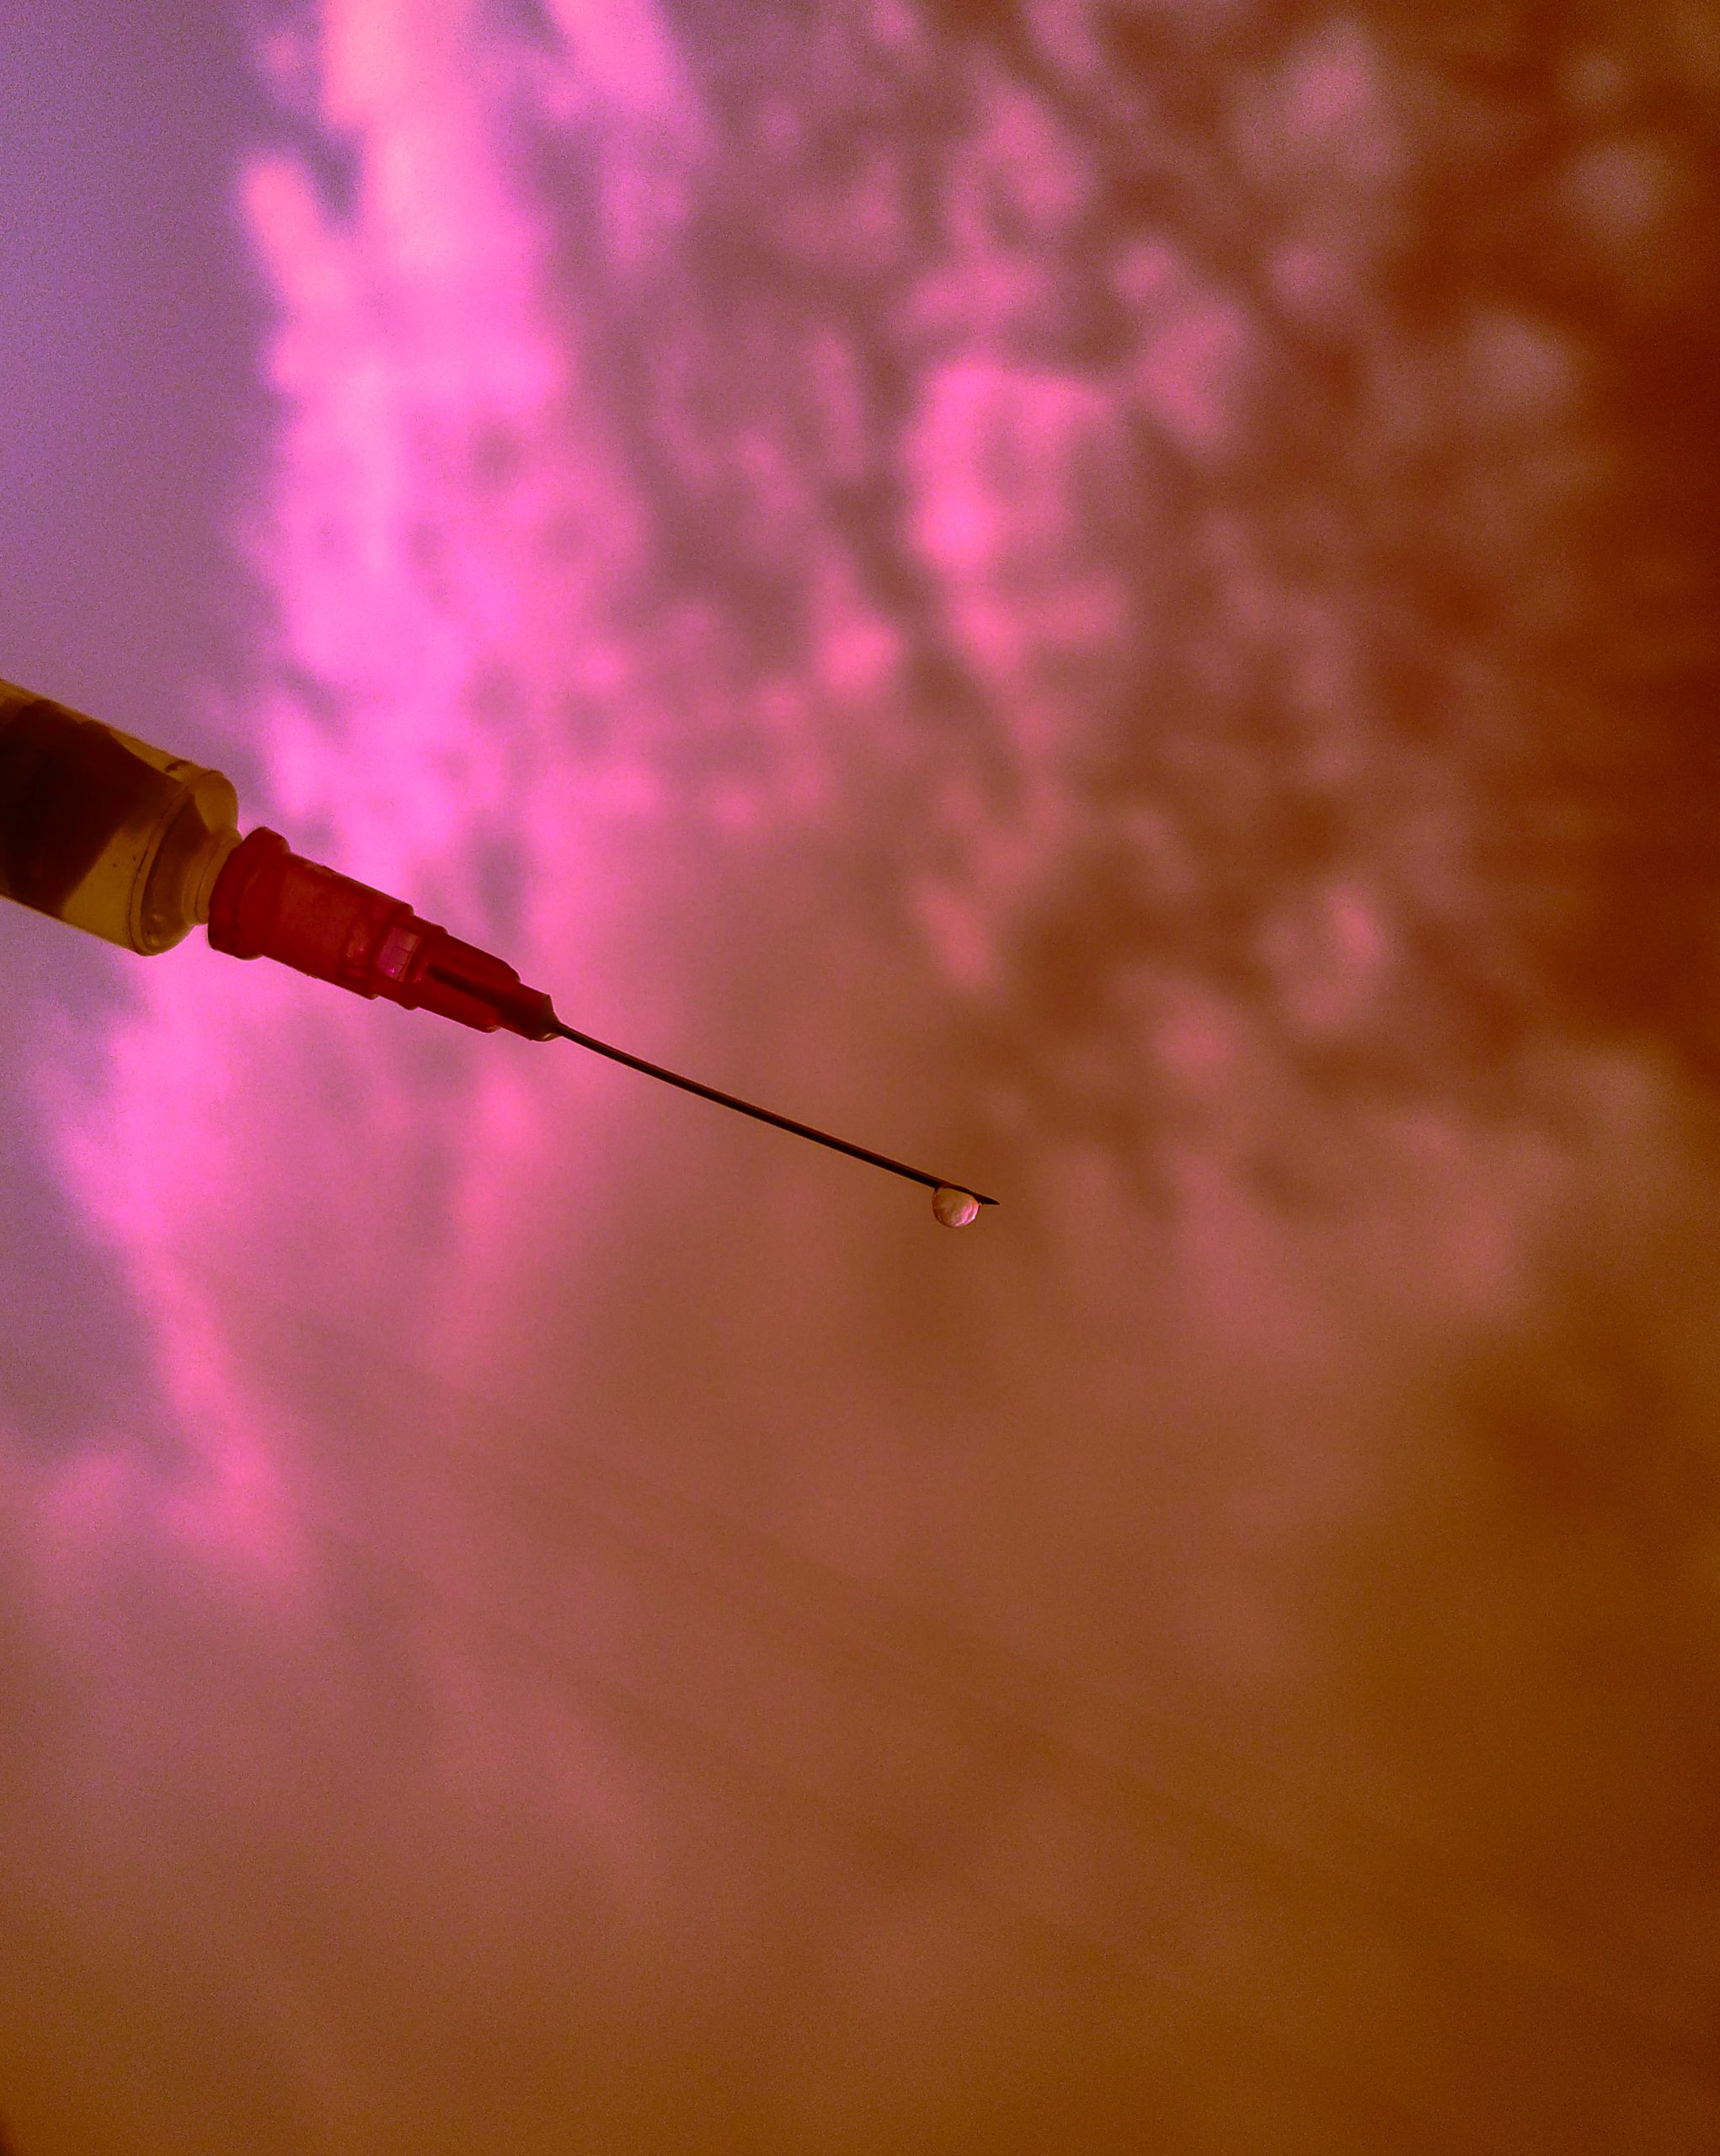 A drop on a syringe needle